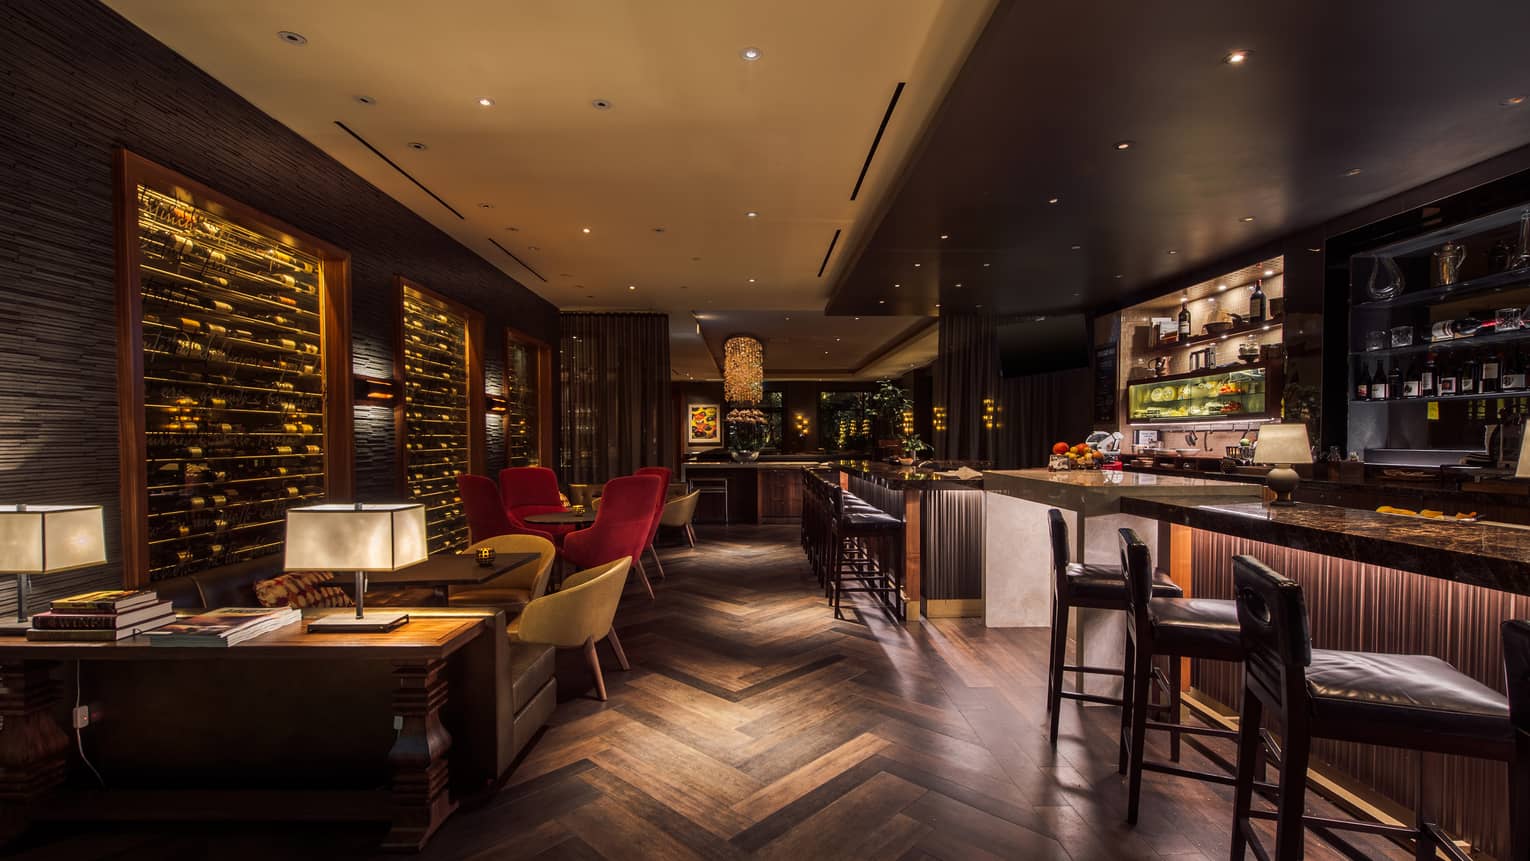 Dimly lit, indoor wine bar with geometric wooden floor, bar, wall of wine bottles